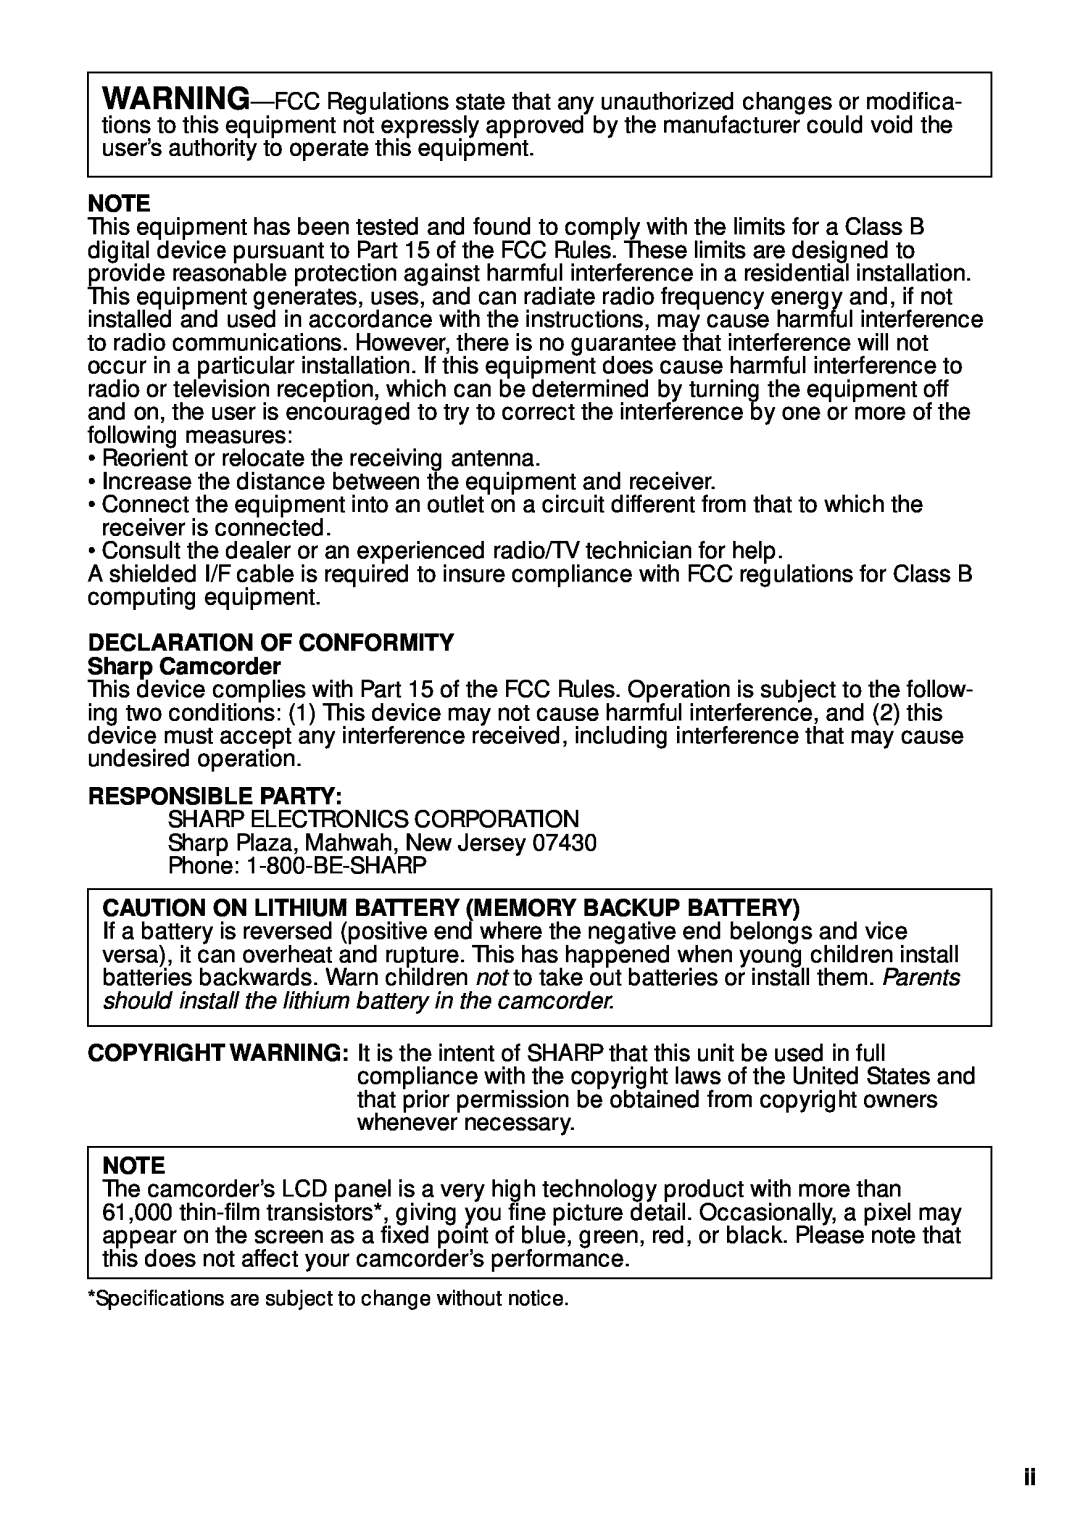 Sharp VL-WD250U operation manual DECLARATION OF CONFORMITY Sharp Camcorder, Responsible Party 